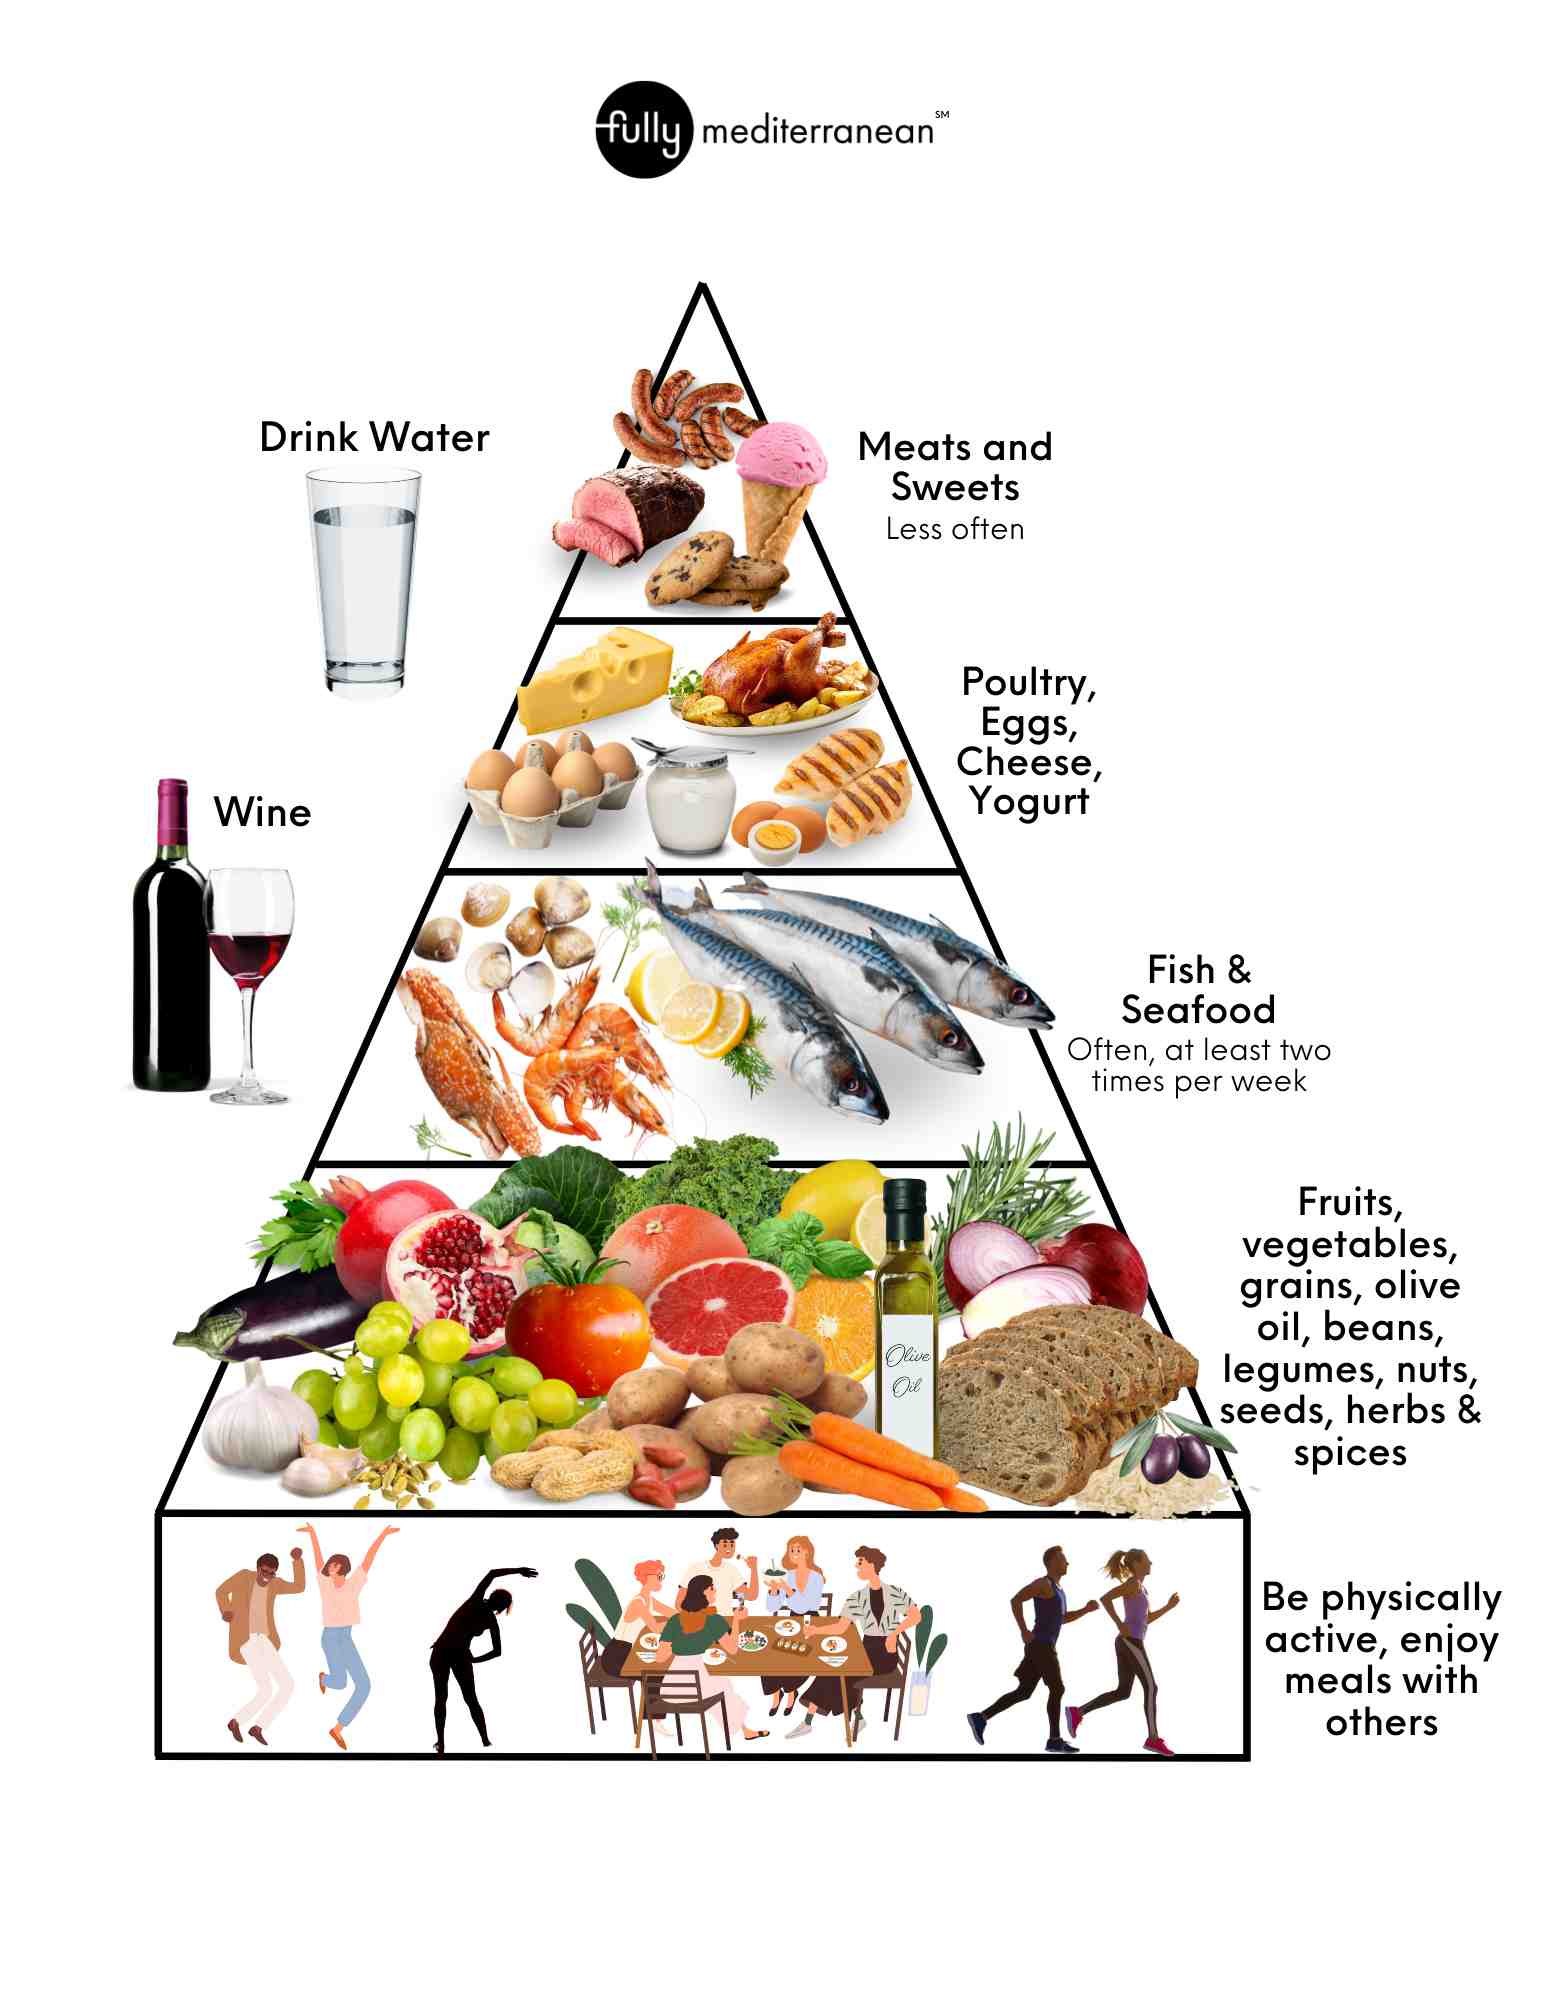 Mediterranean Diet Pyramid Printable - Fully Mediterranean